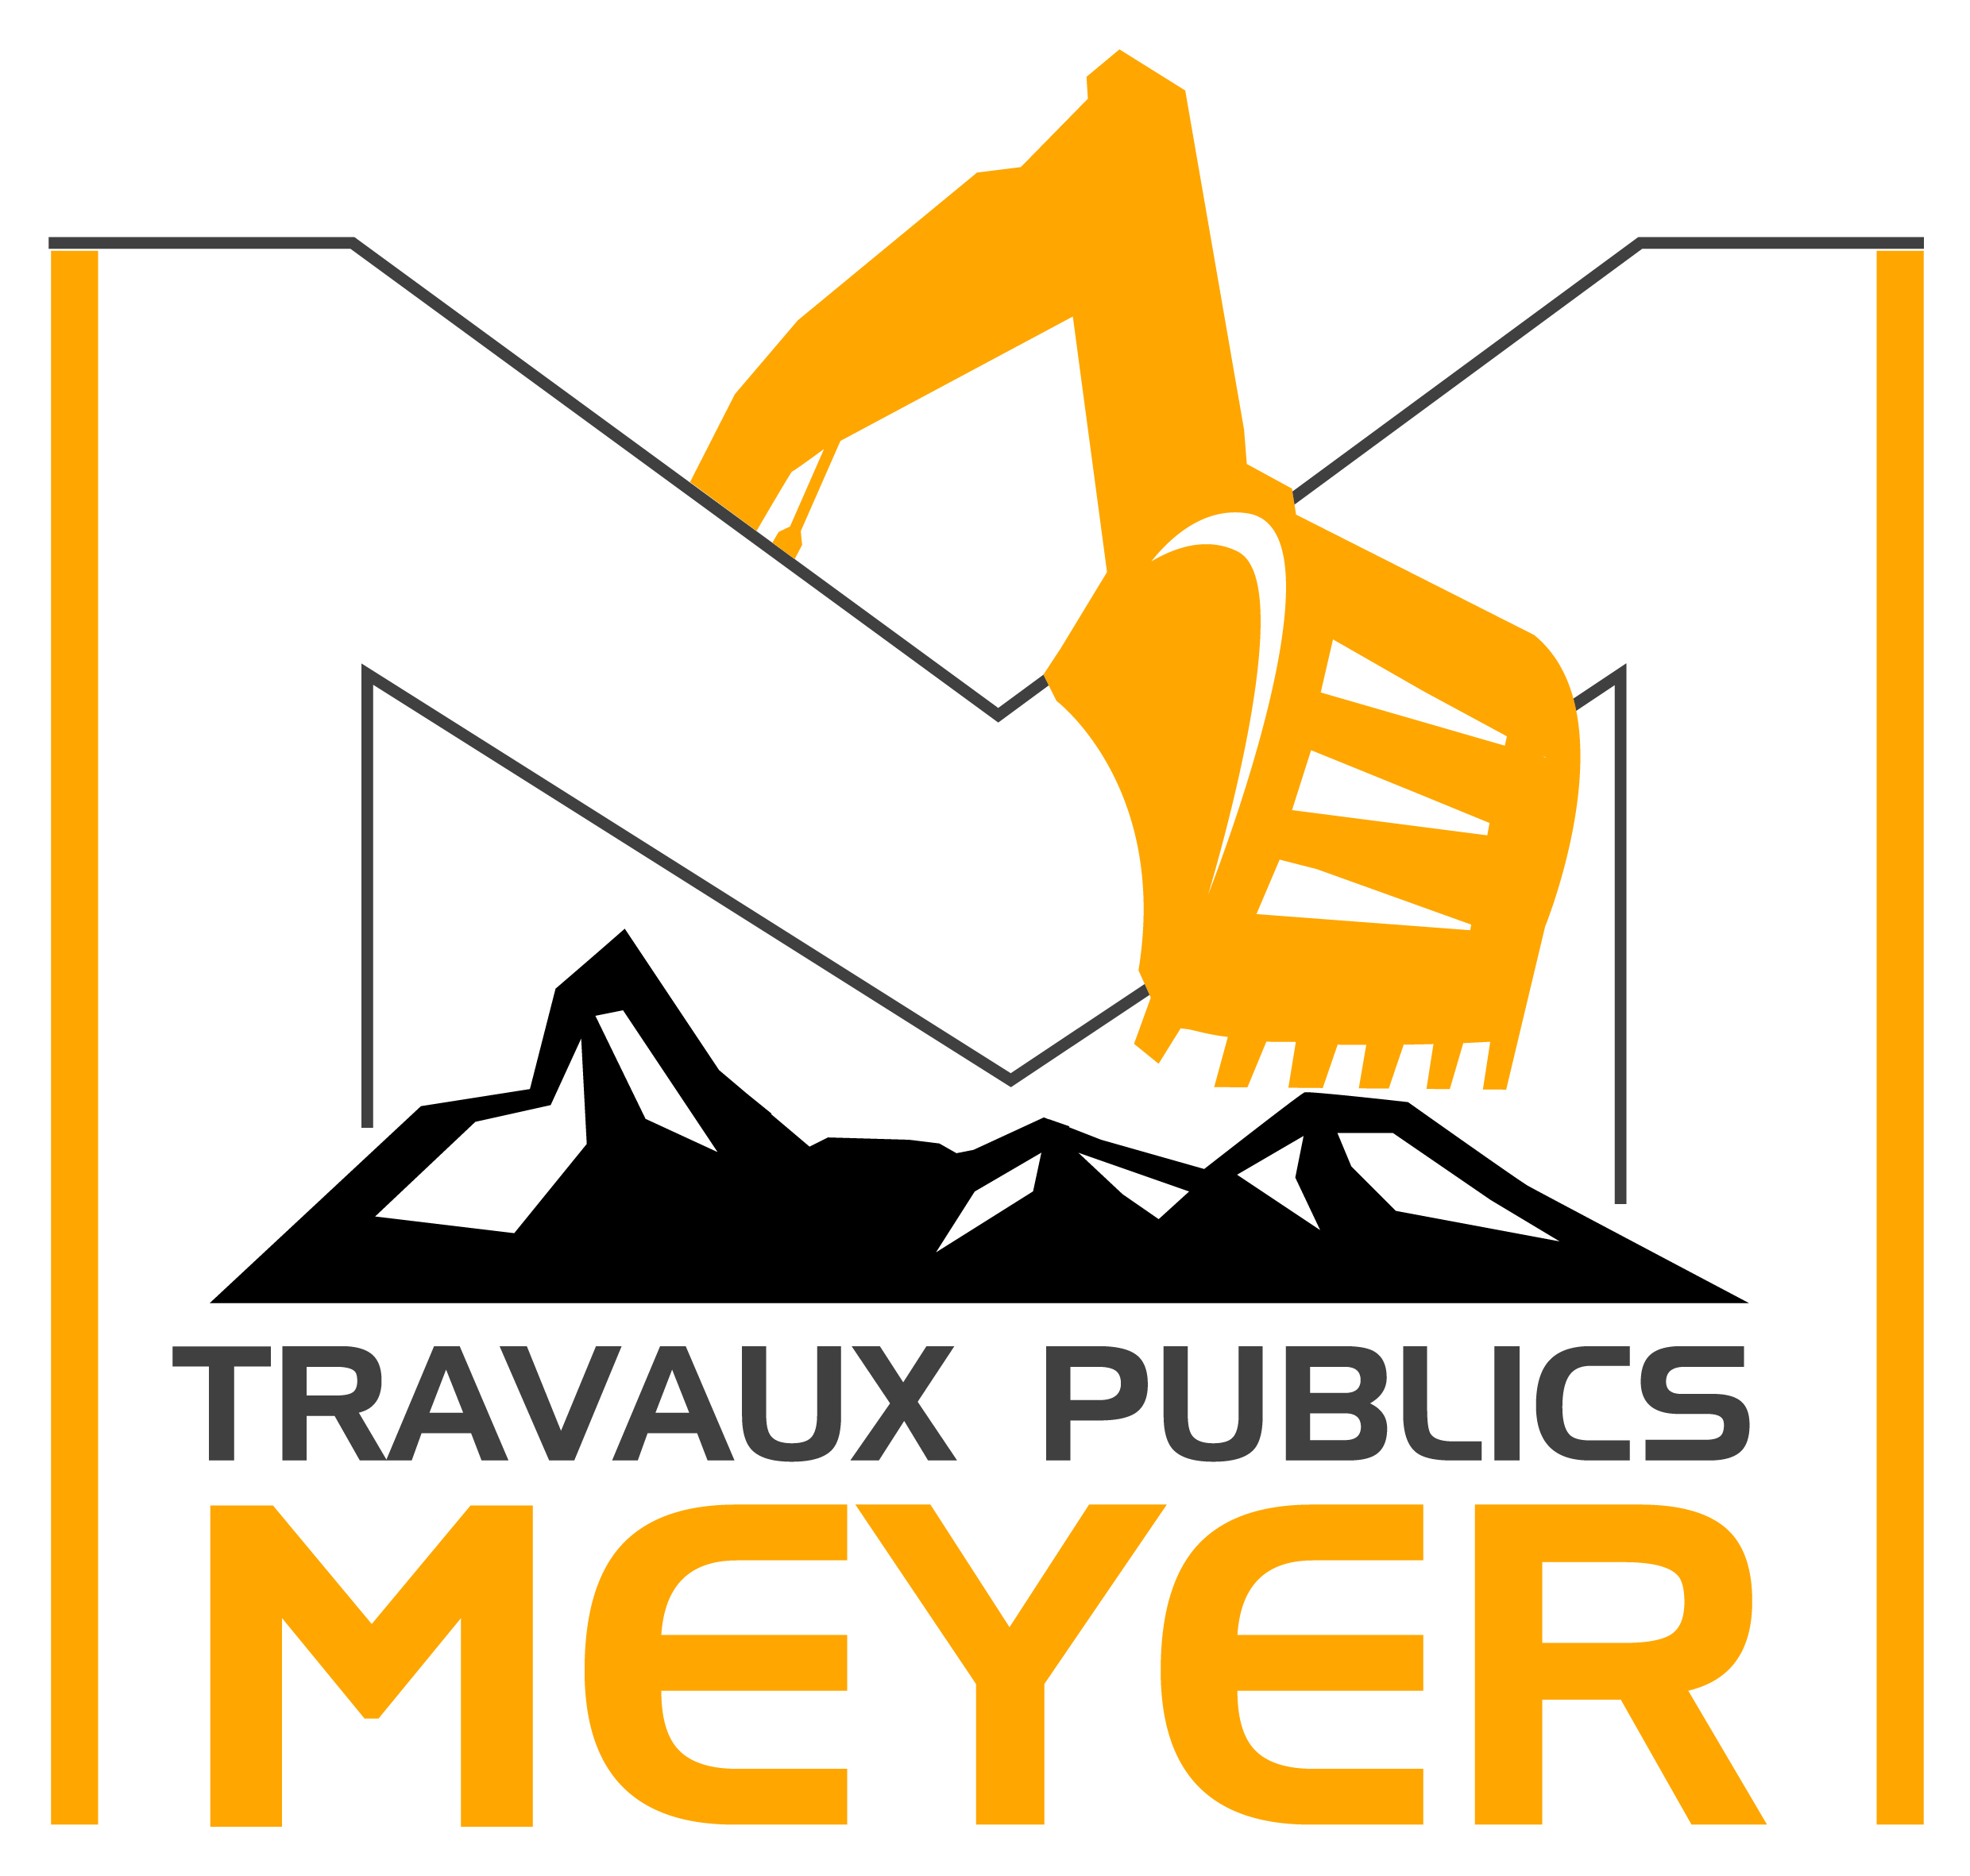 TP MEYER logo OK 1117